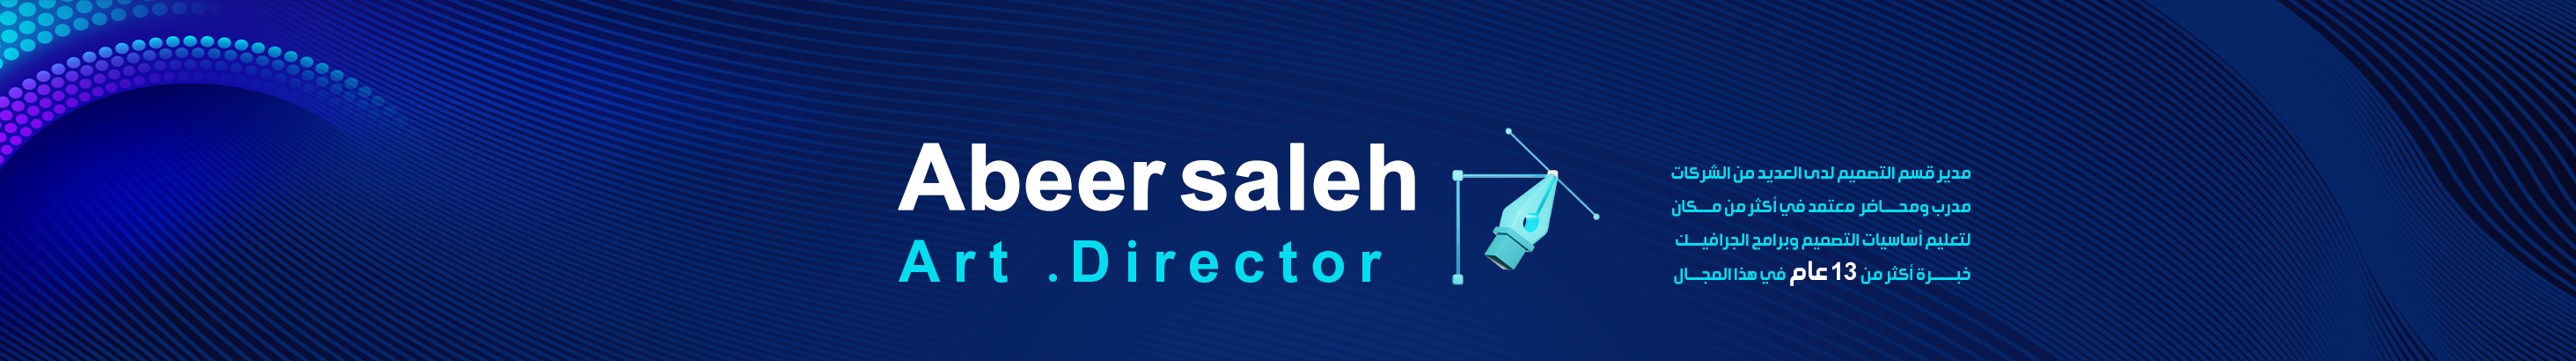 Abeer saleh's profile banner